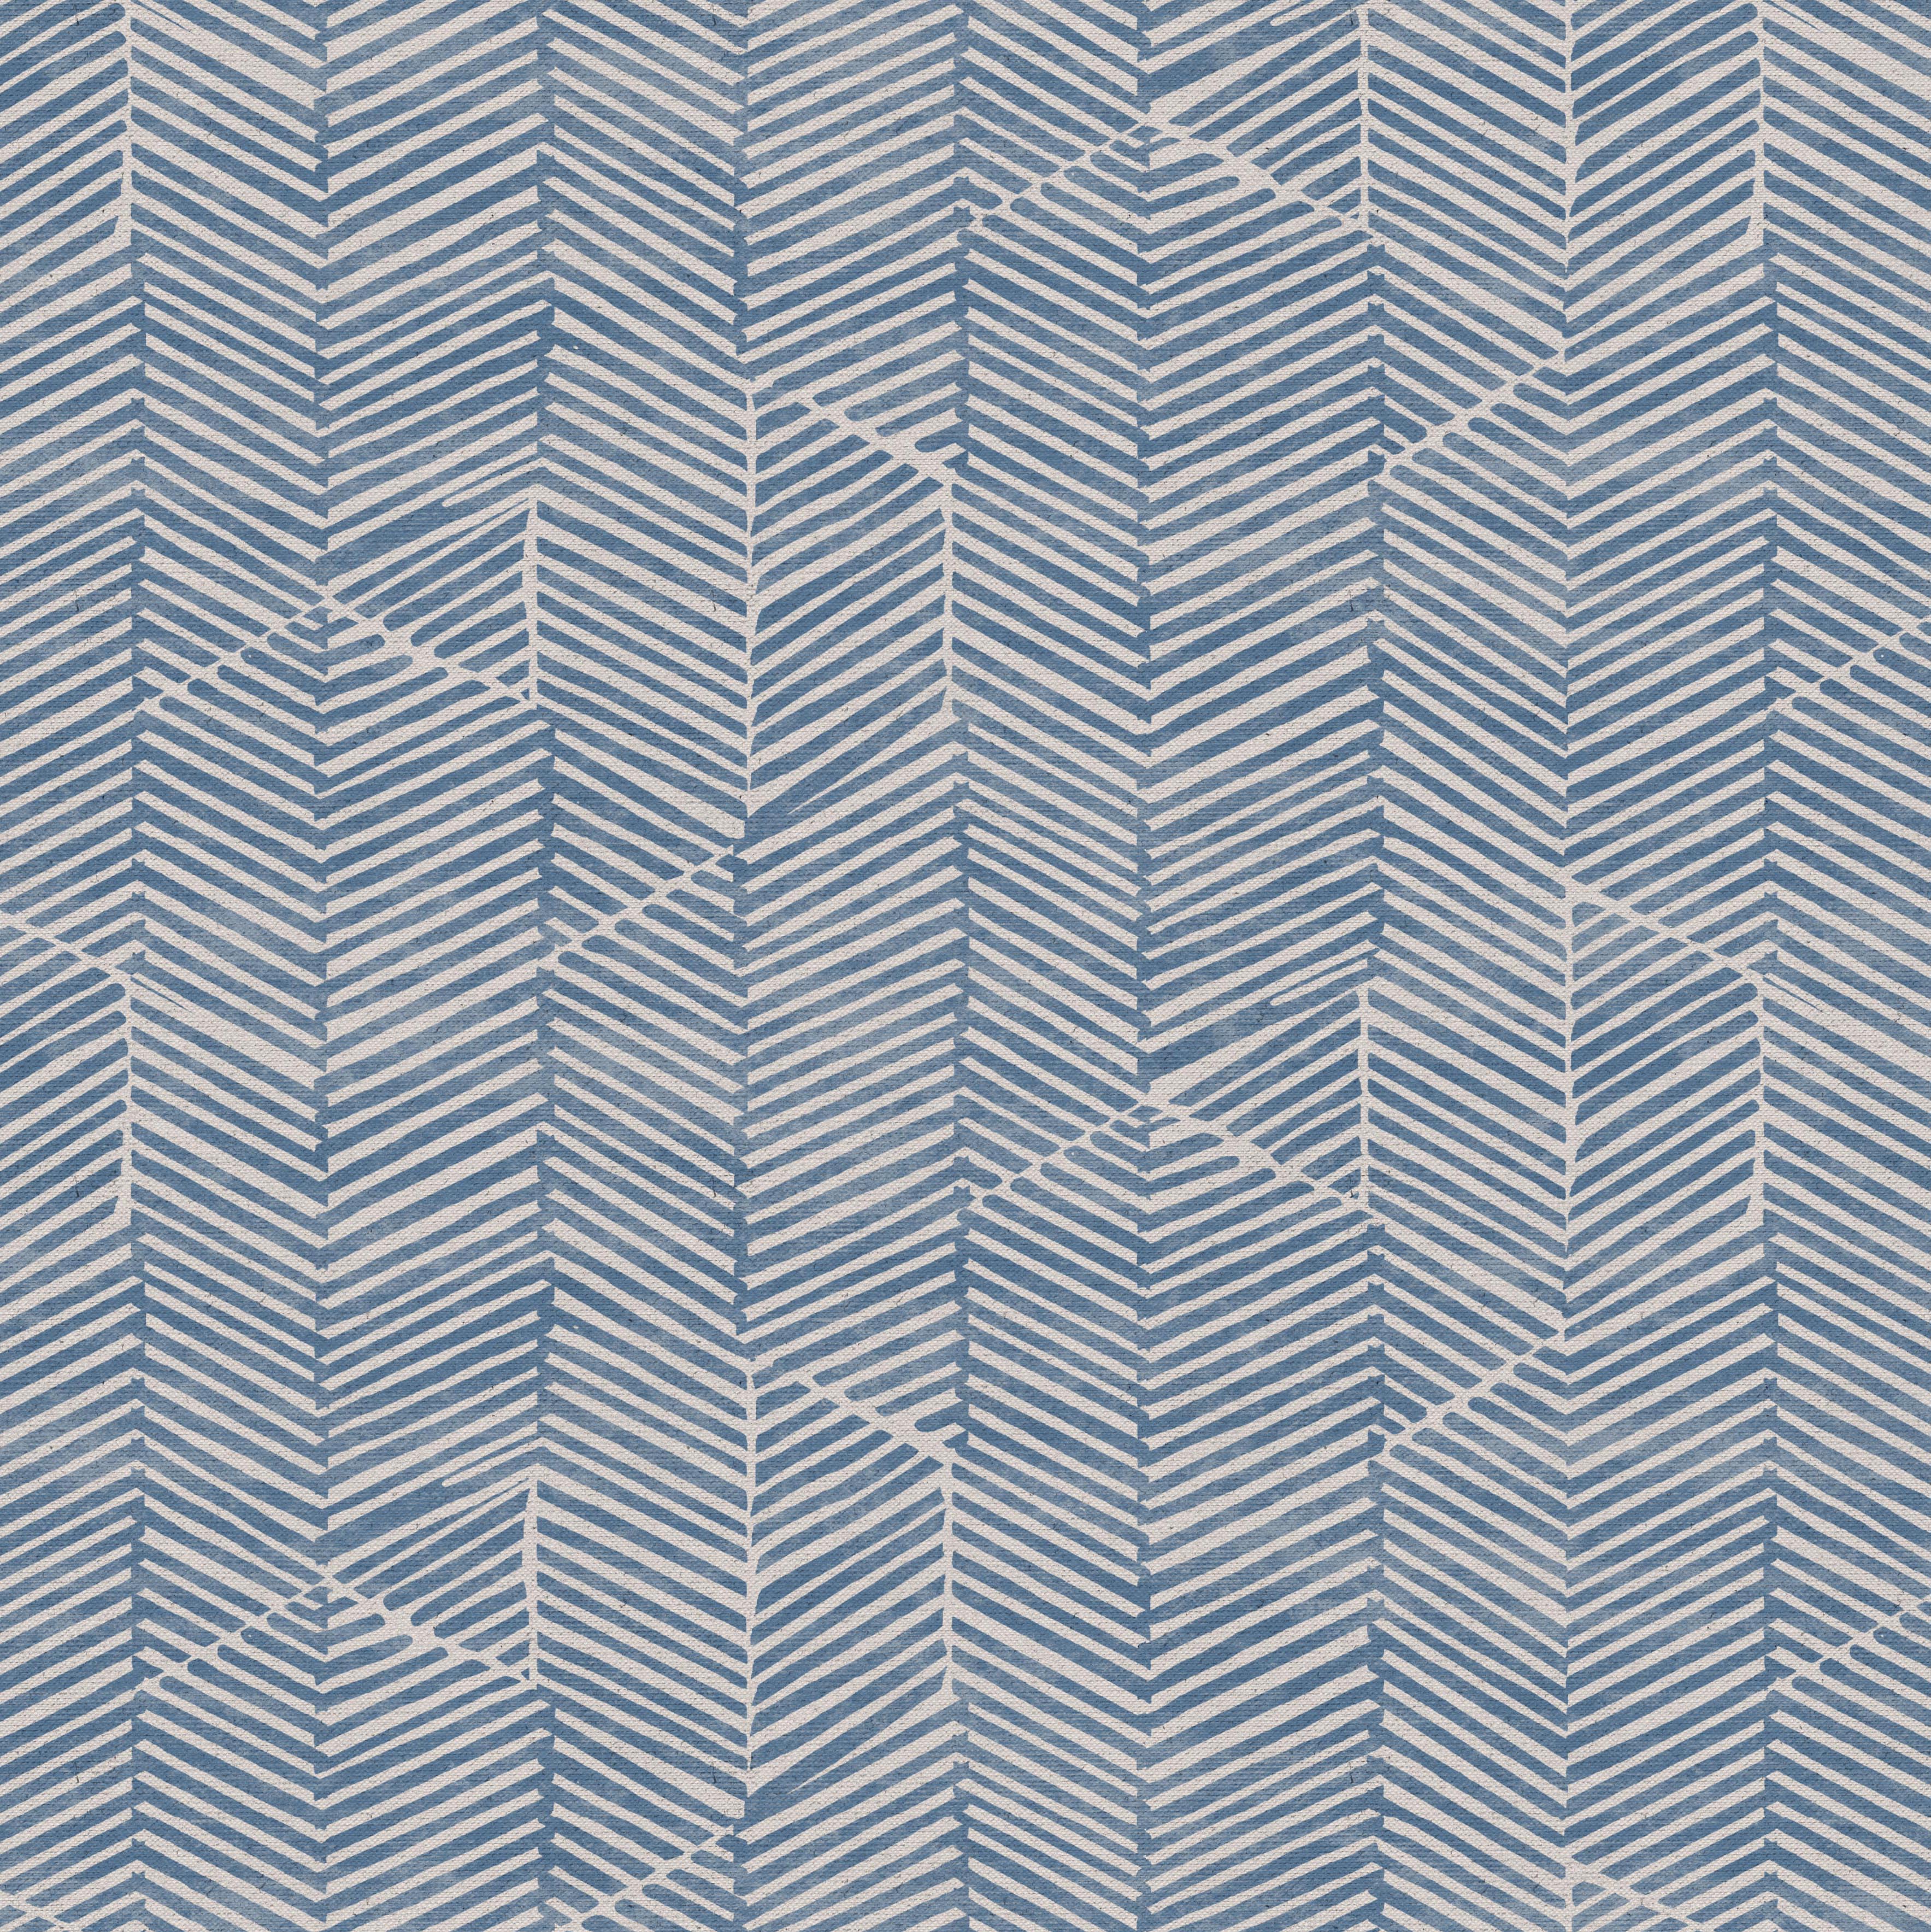 Detail of fabric in a dense herringbone print in dusty blue on a tan field.